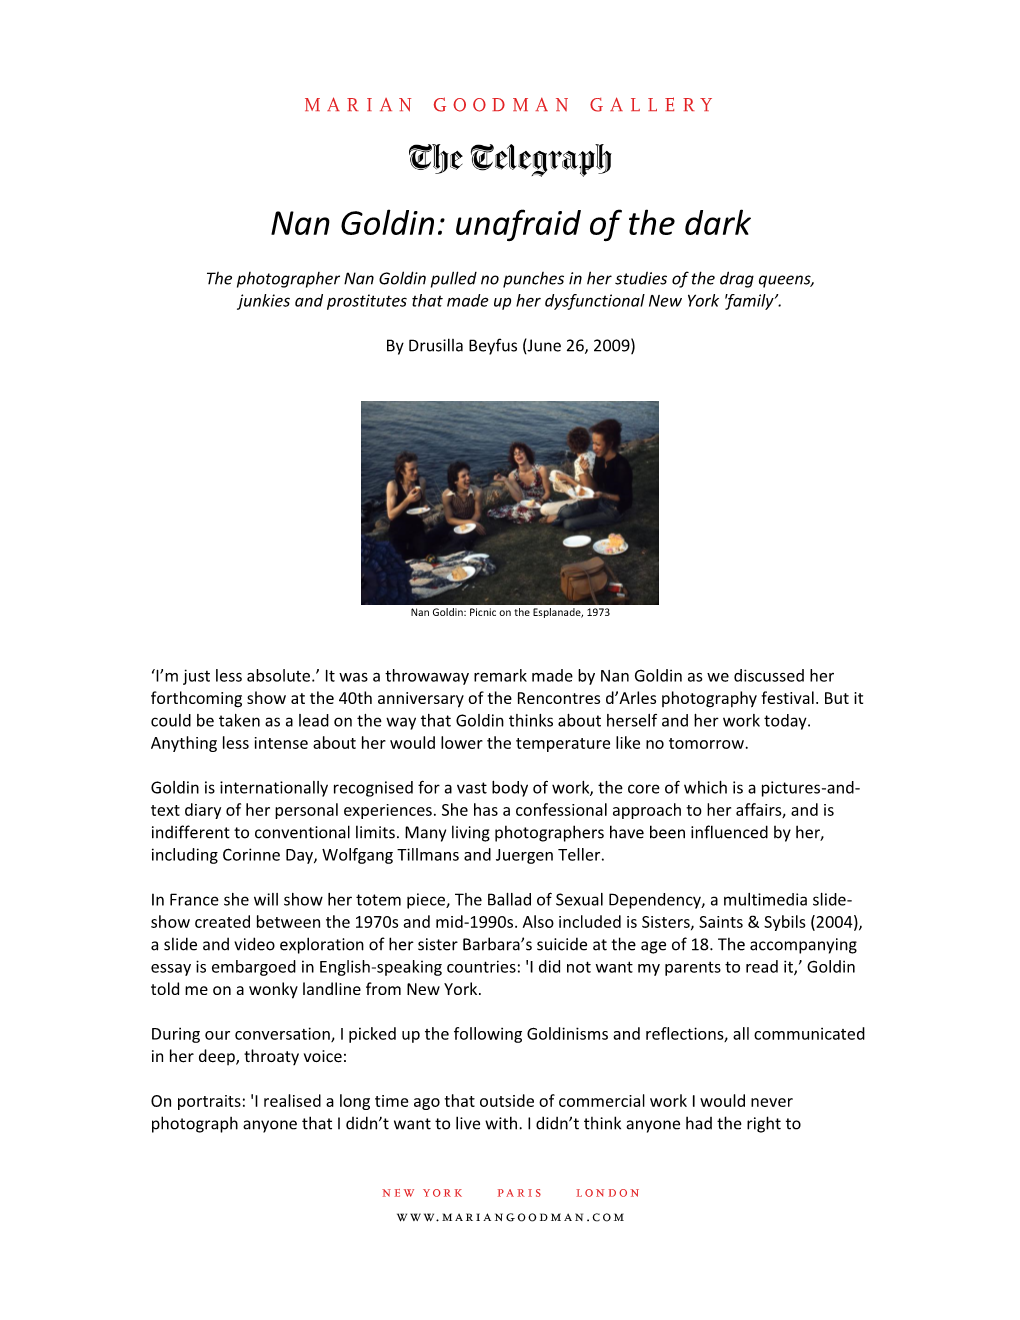 Nan Goldin: Unafraid of the Dark